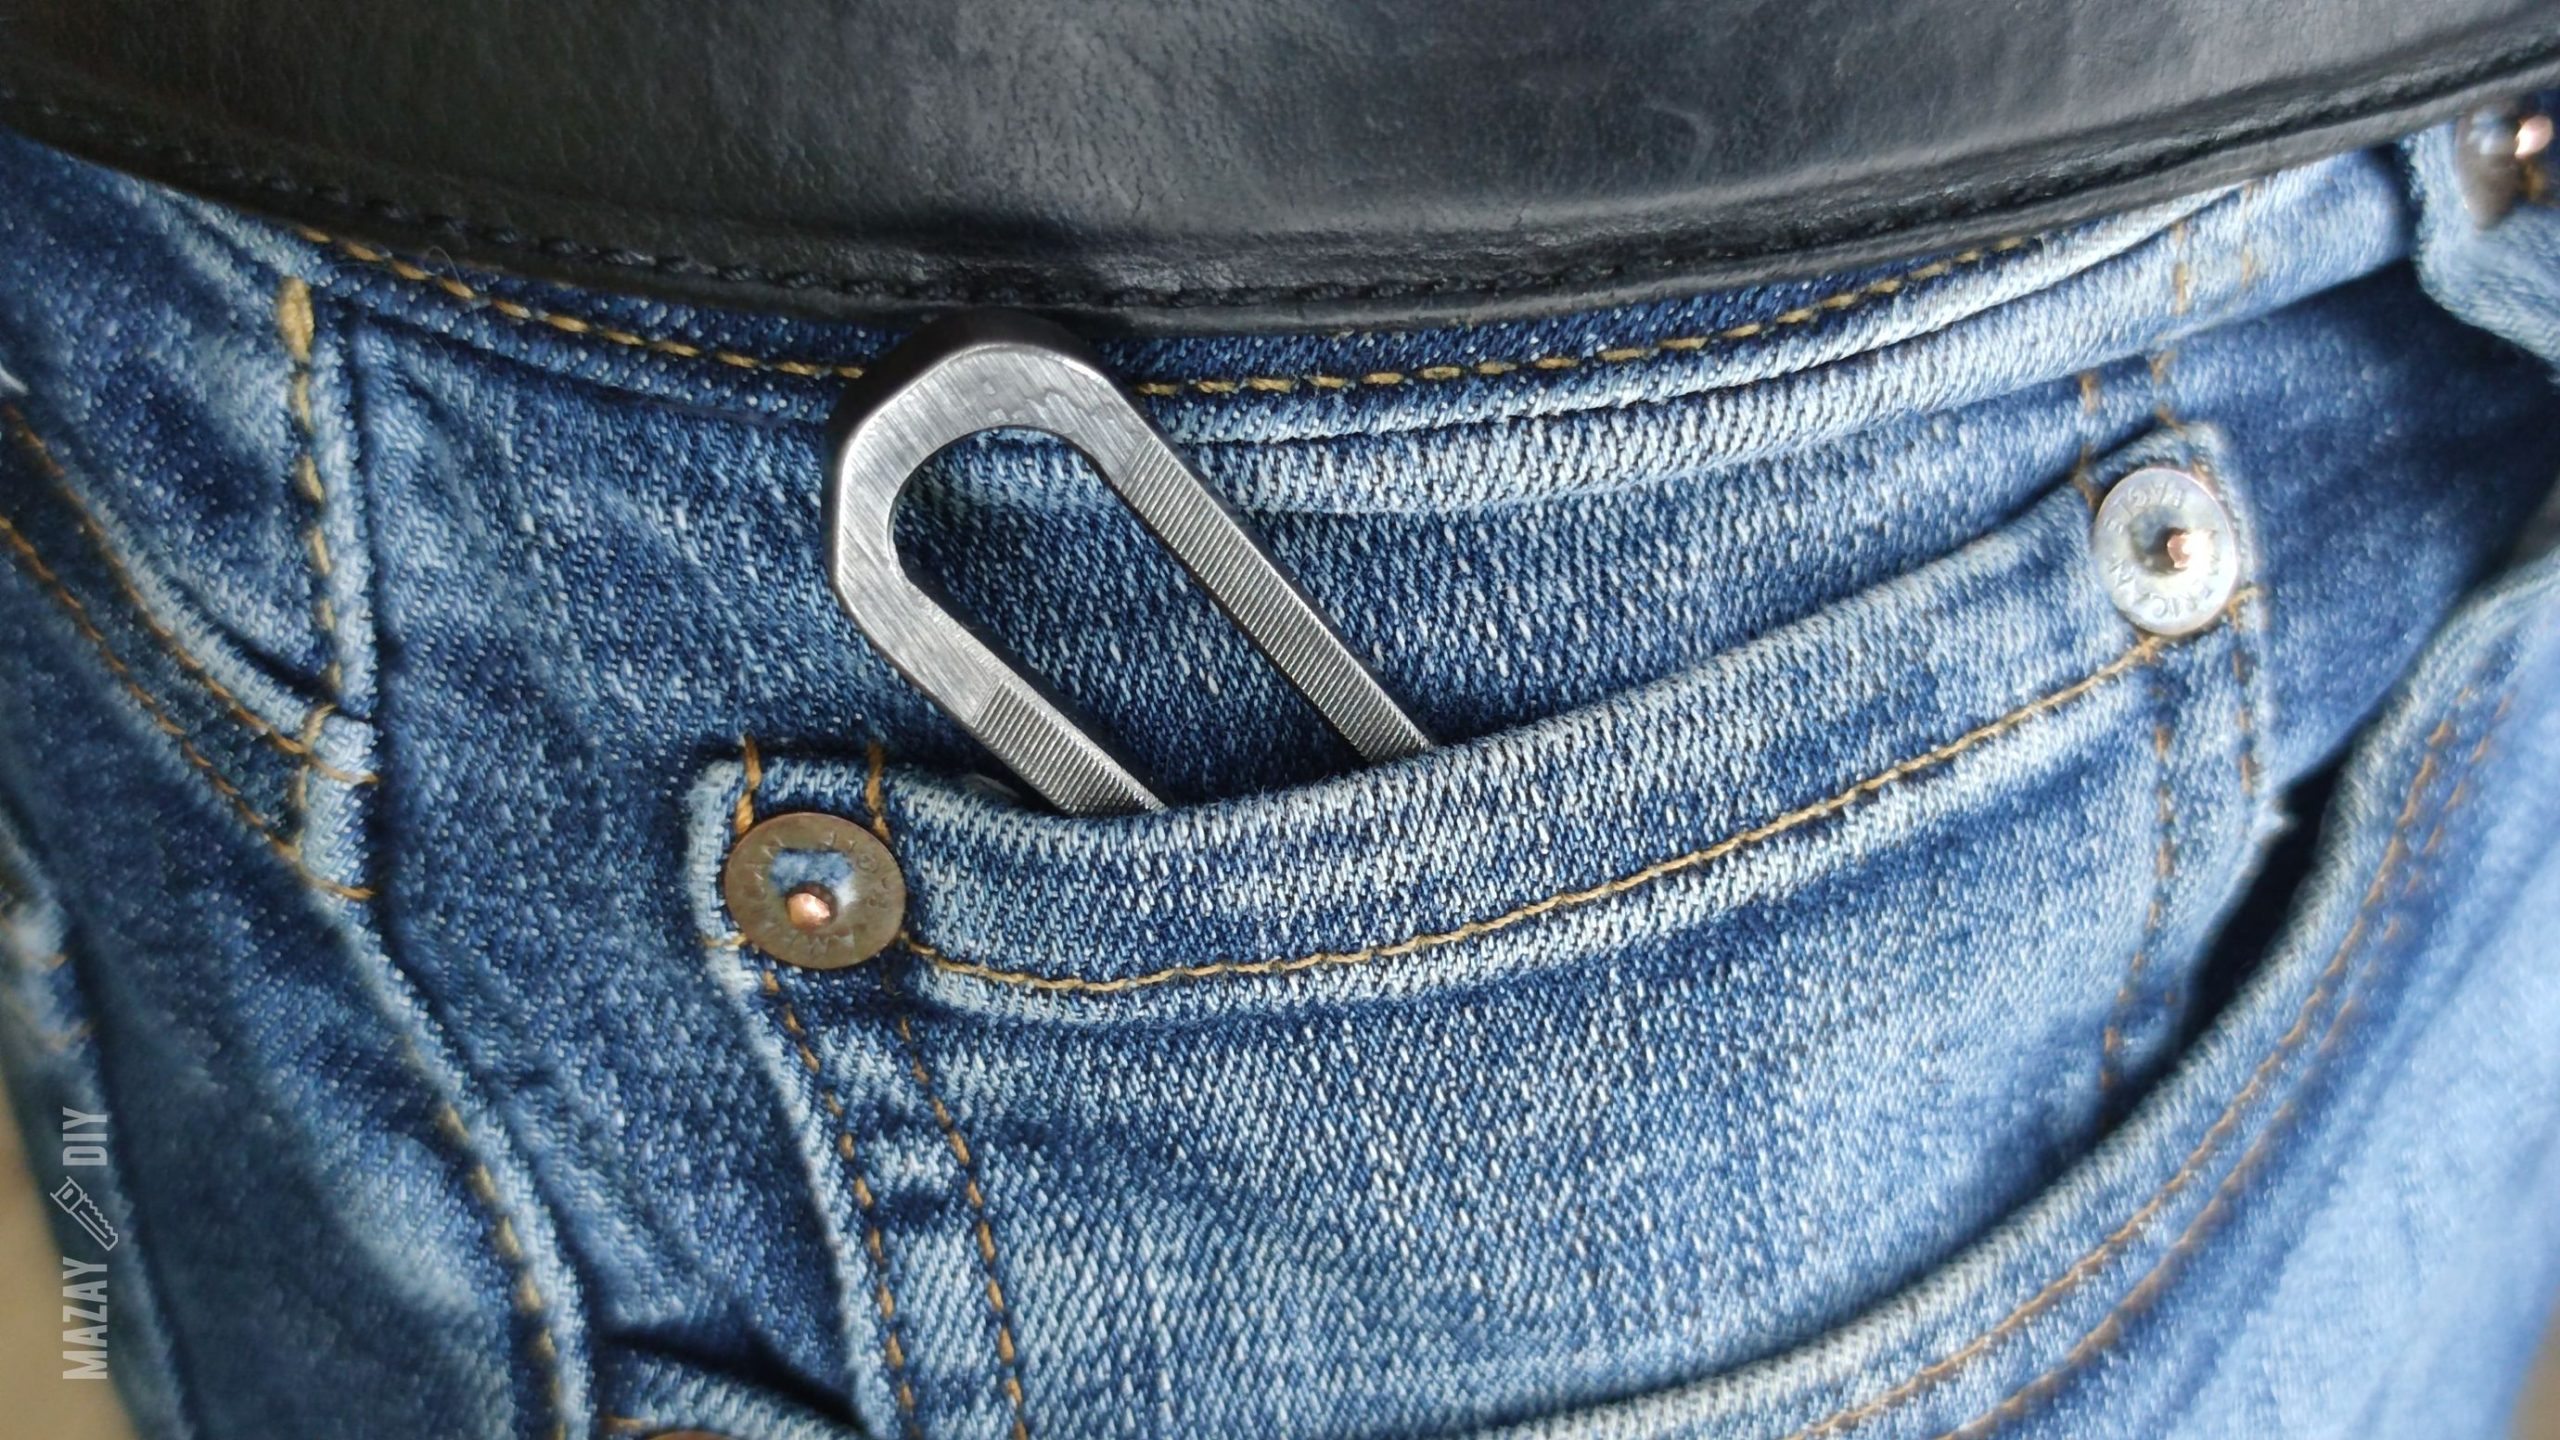 skeleton knife in the pocket